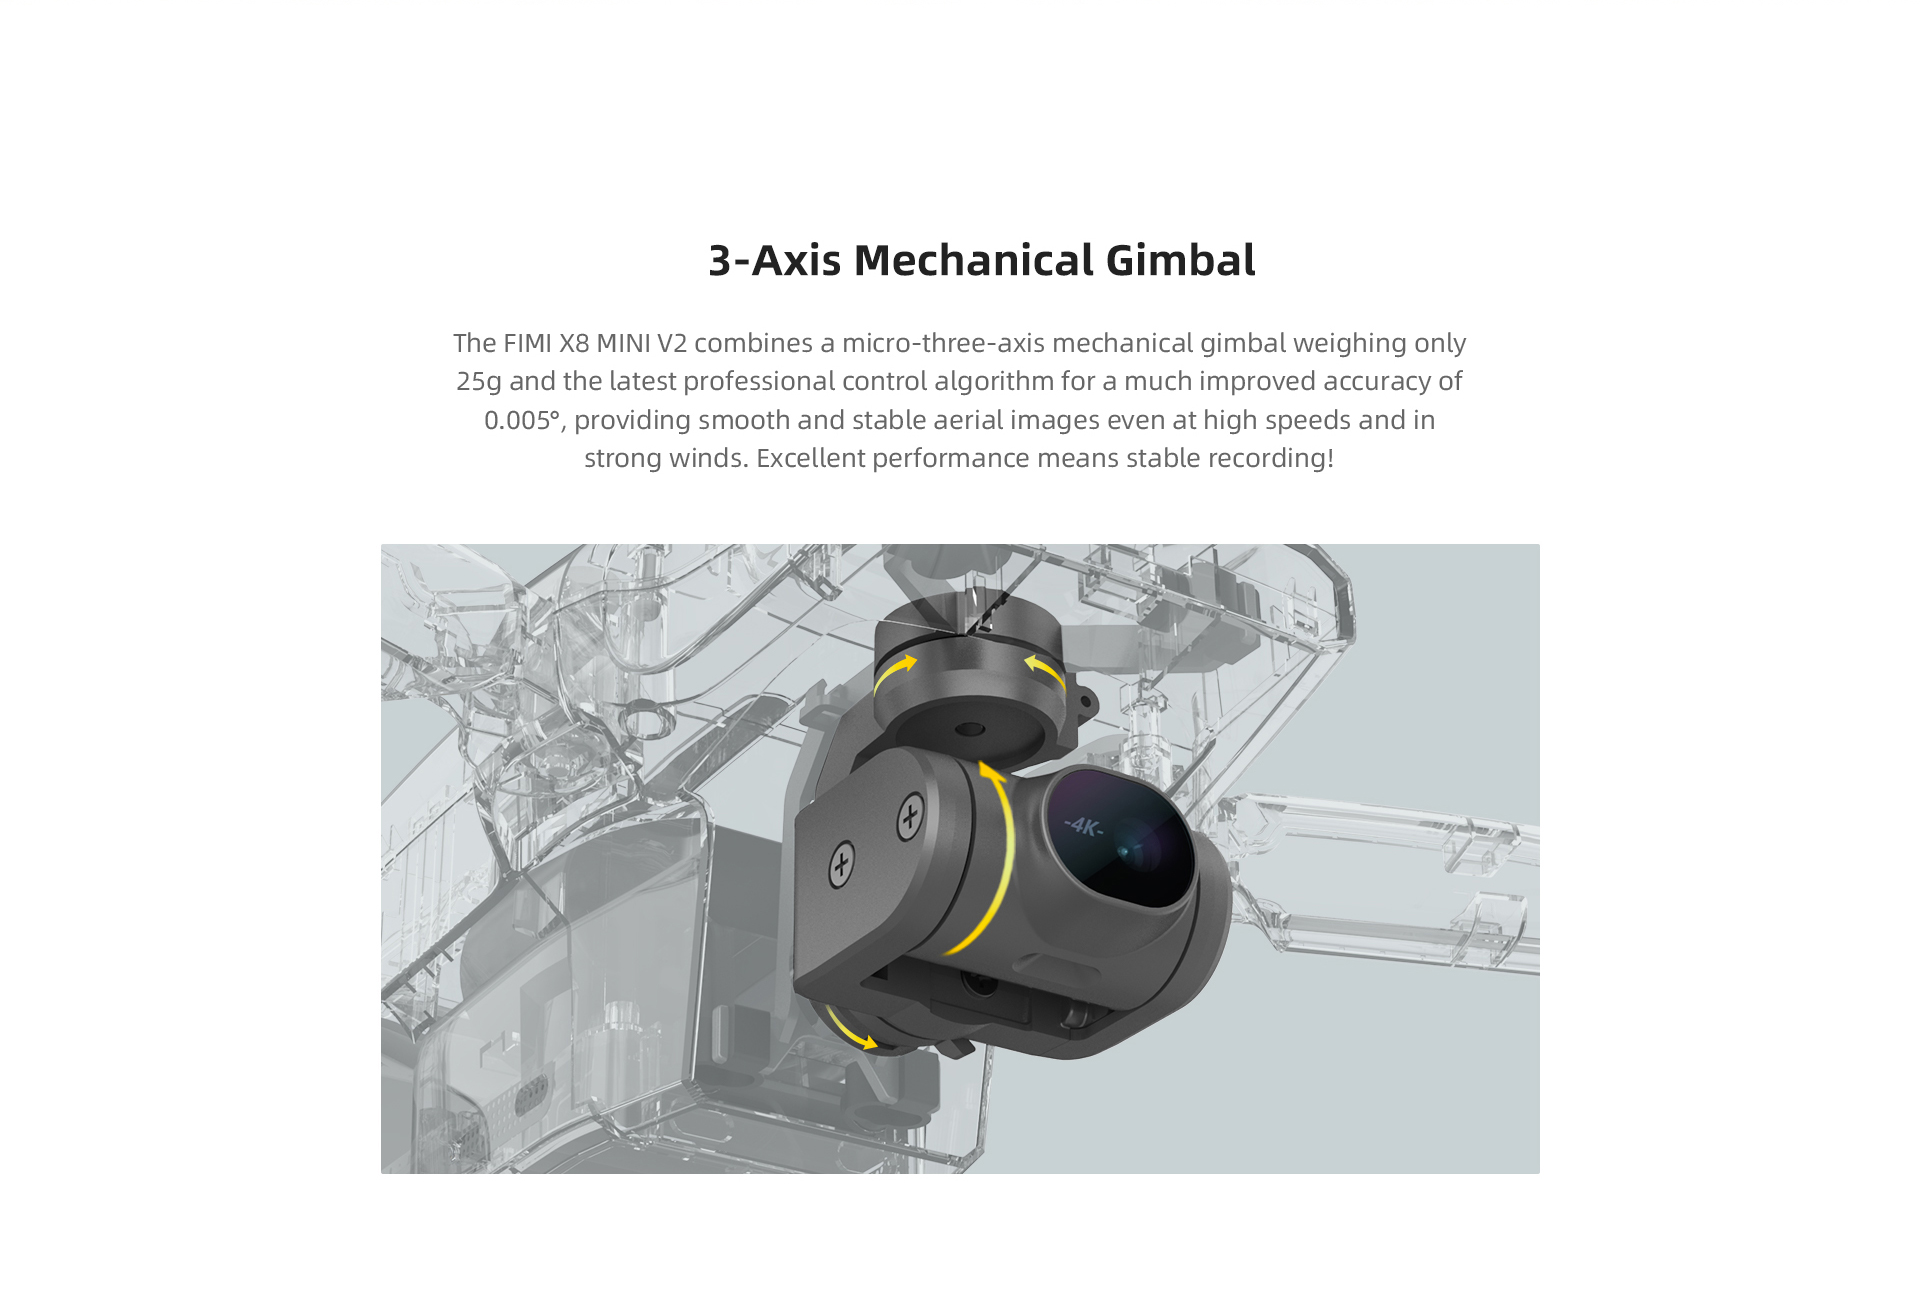 FIMI X8 MINI V2 245g 9KM FPV With 4K Camera HDR Video 3-axis Mechanical Gimbal 37mins Flight Time GPS Foldable RC Drone Quadcopter RTF